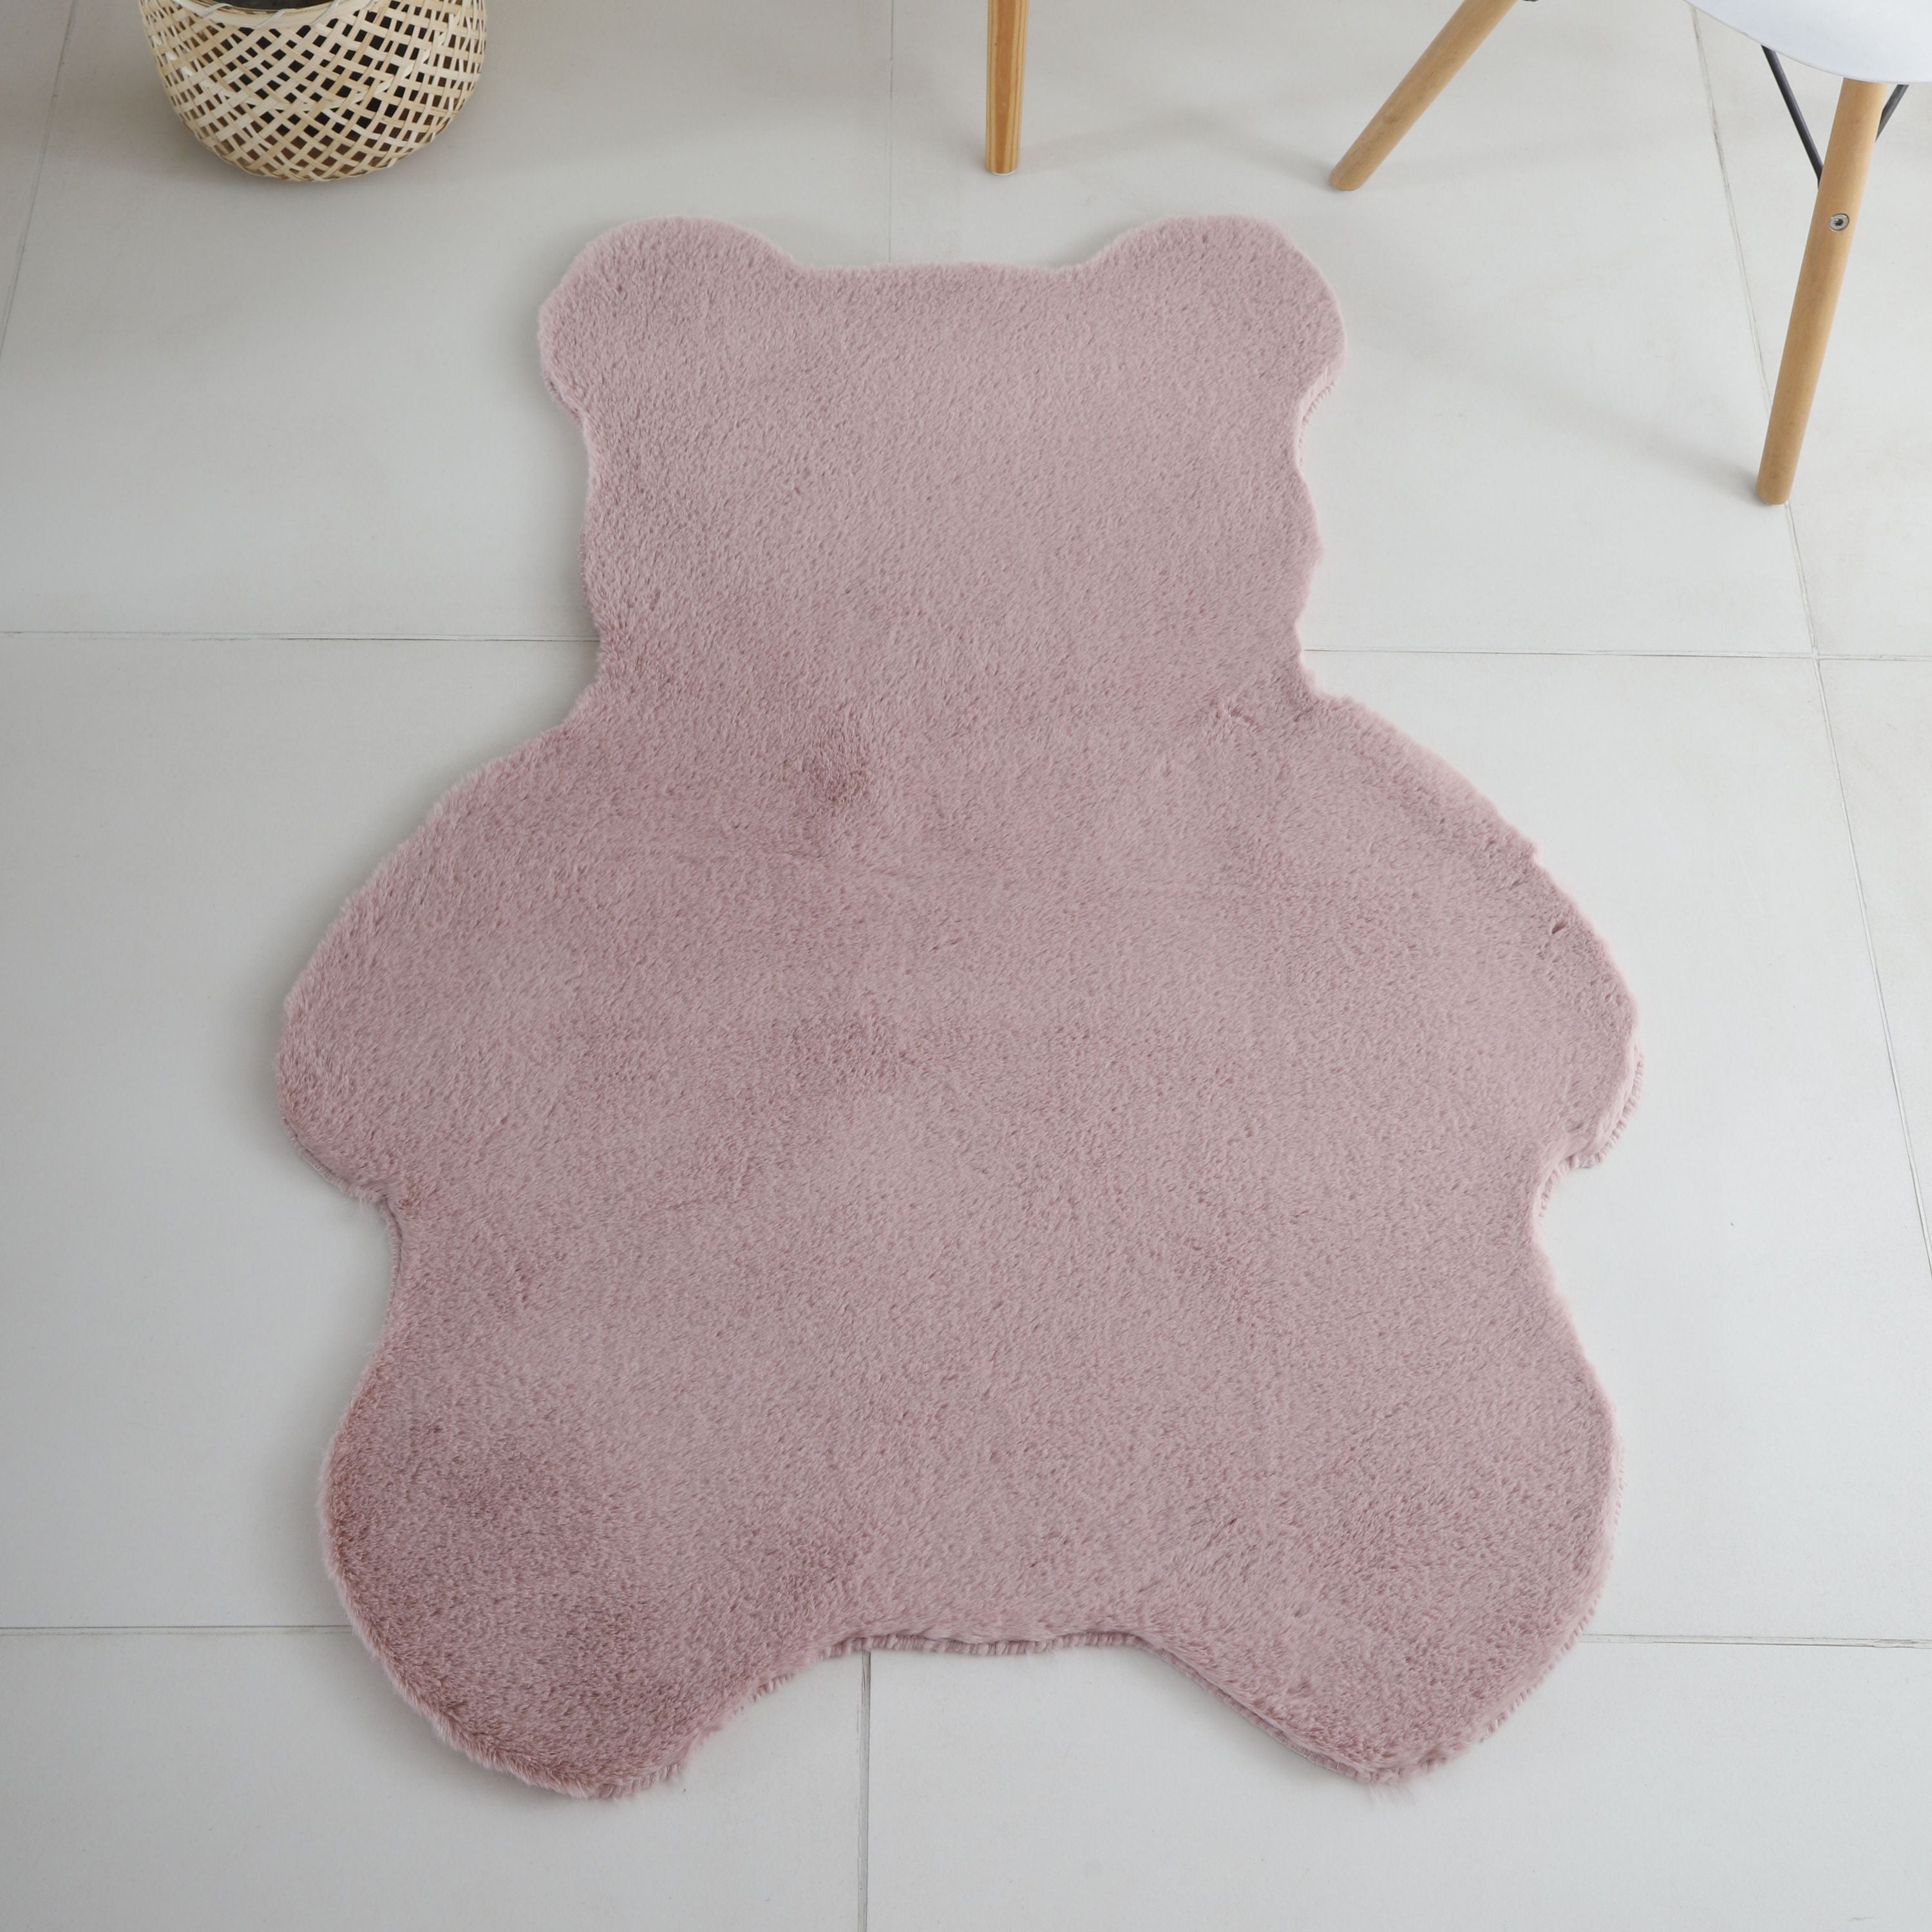 Kinderzimmer Teppich Bear Design Kinderteppich Waschbarer Hochflor Flauschig